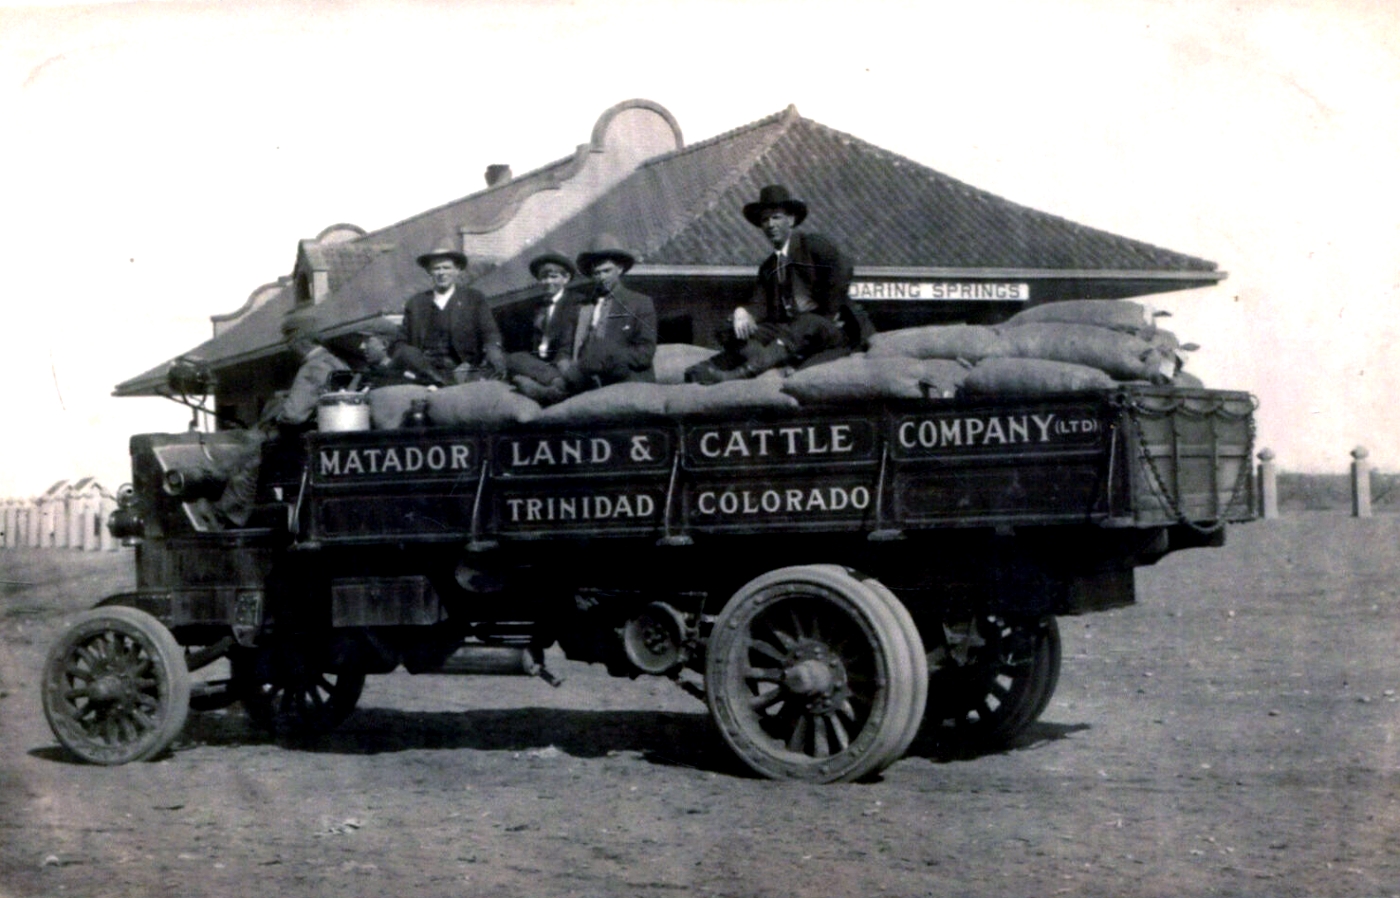 Roaring Springs Texas Railroad Depot in 1914